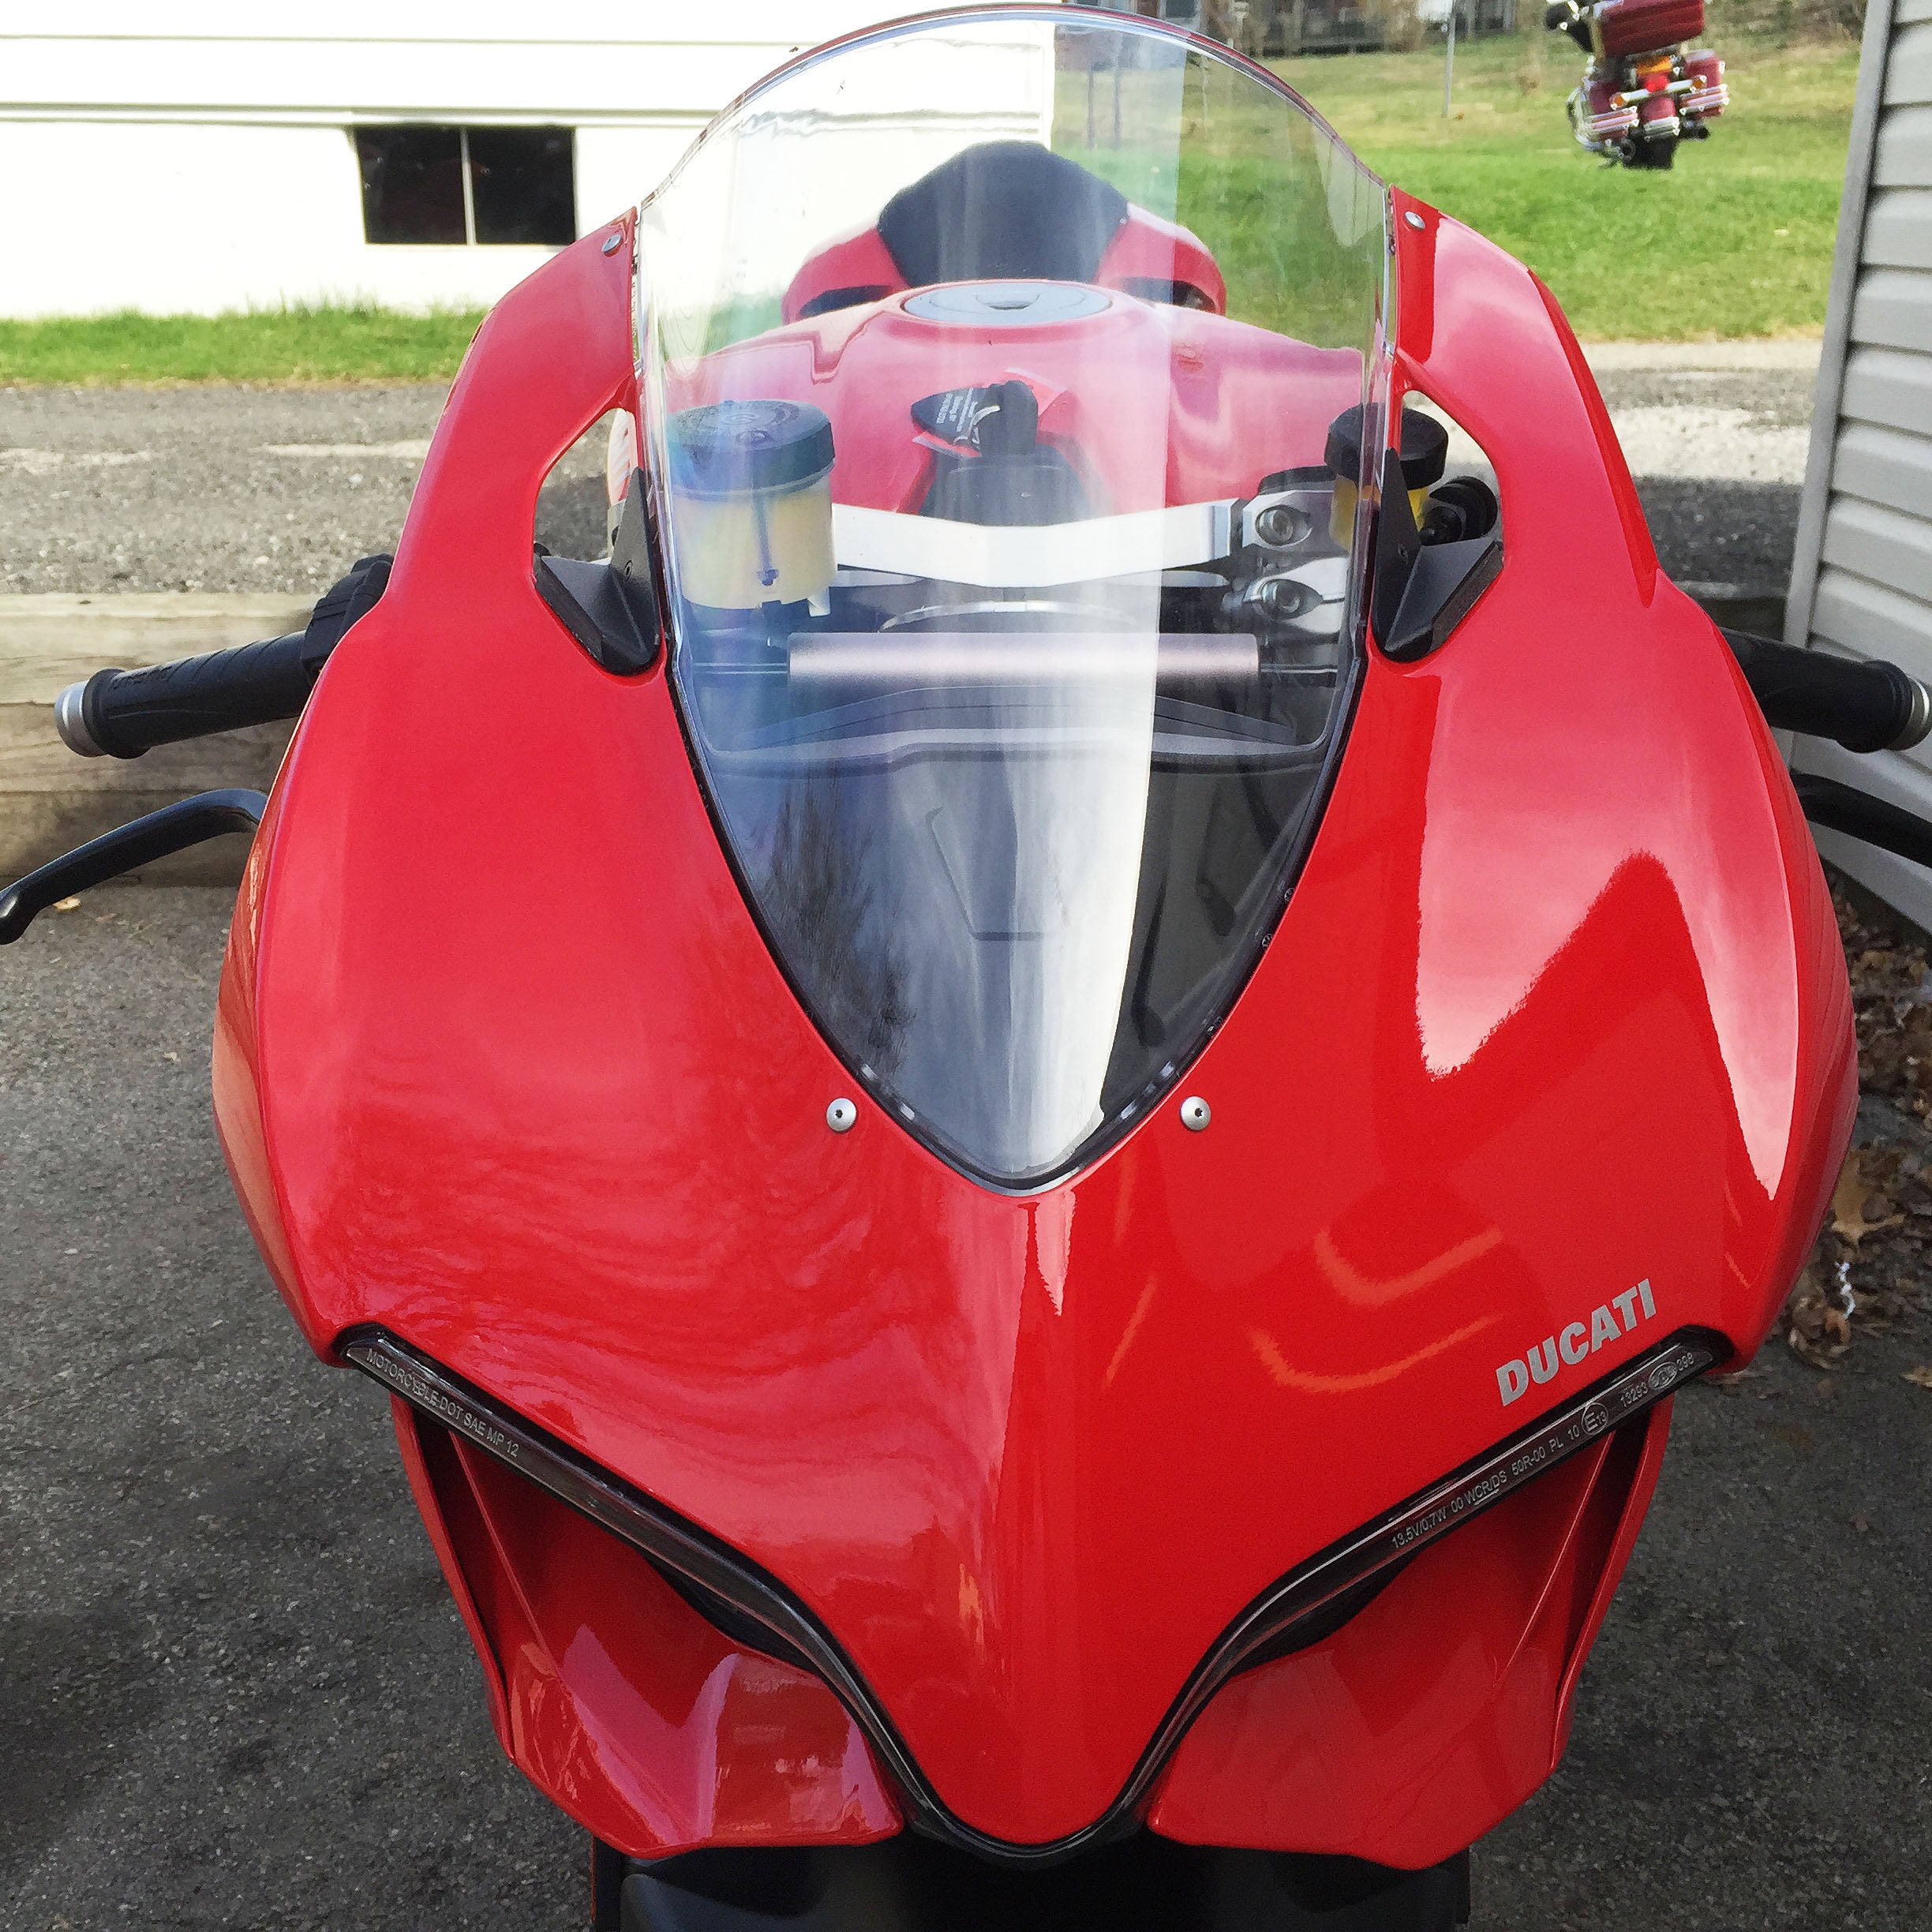 Ducati 899 Panigale Mirror Block Off Turn Signals (2013 - 2015)